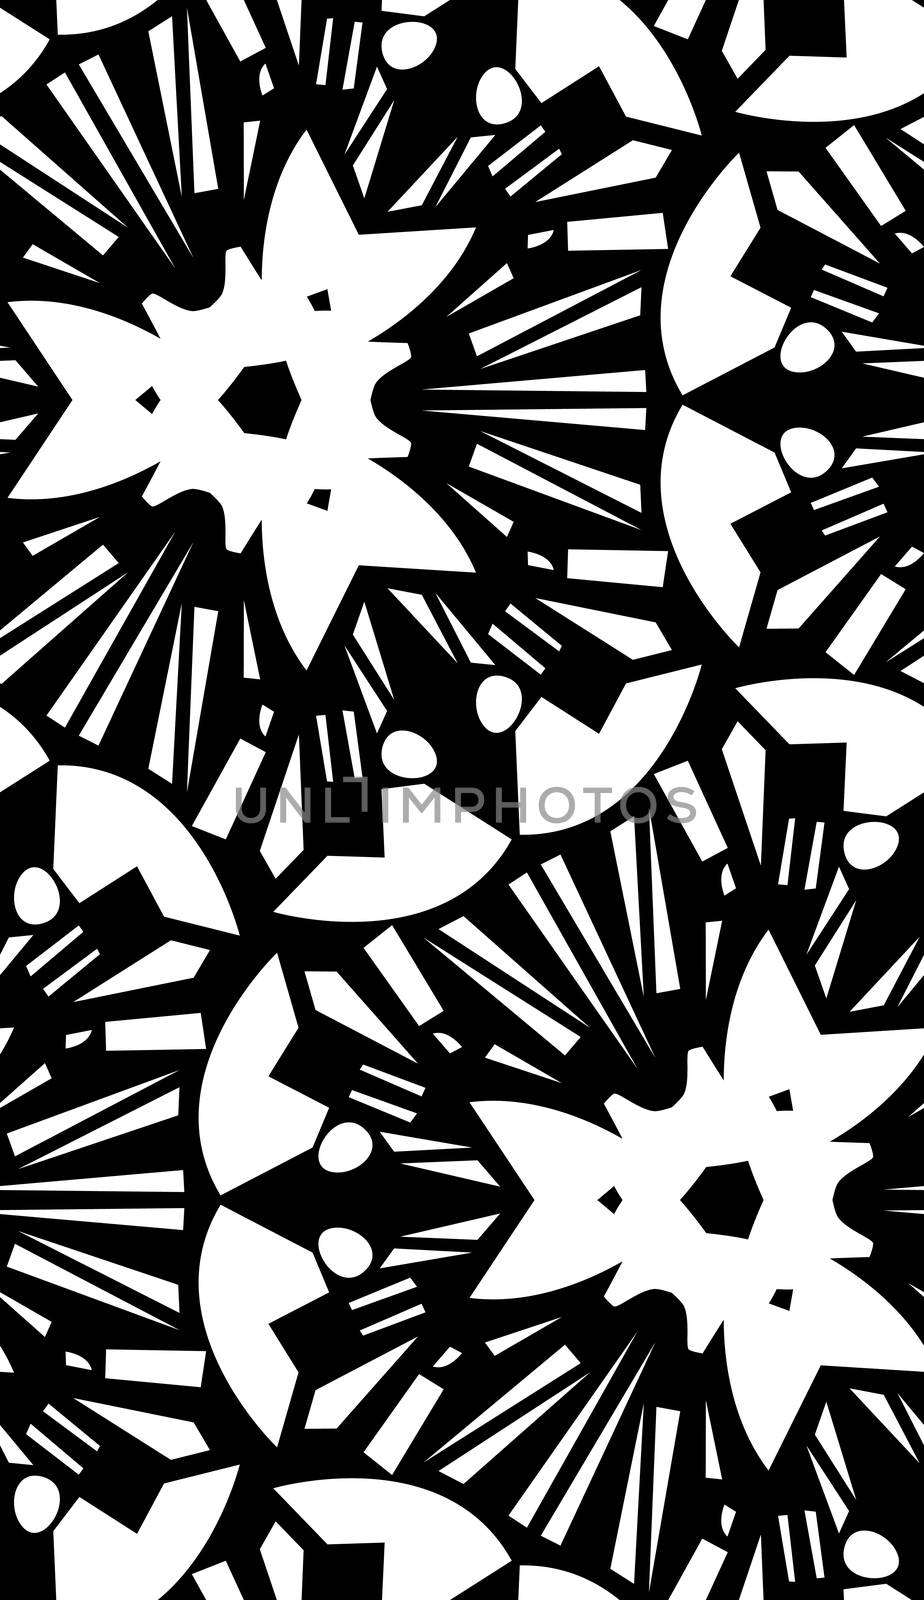 White Starburst Repeating Pattern by TheBlackRhino